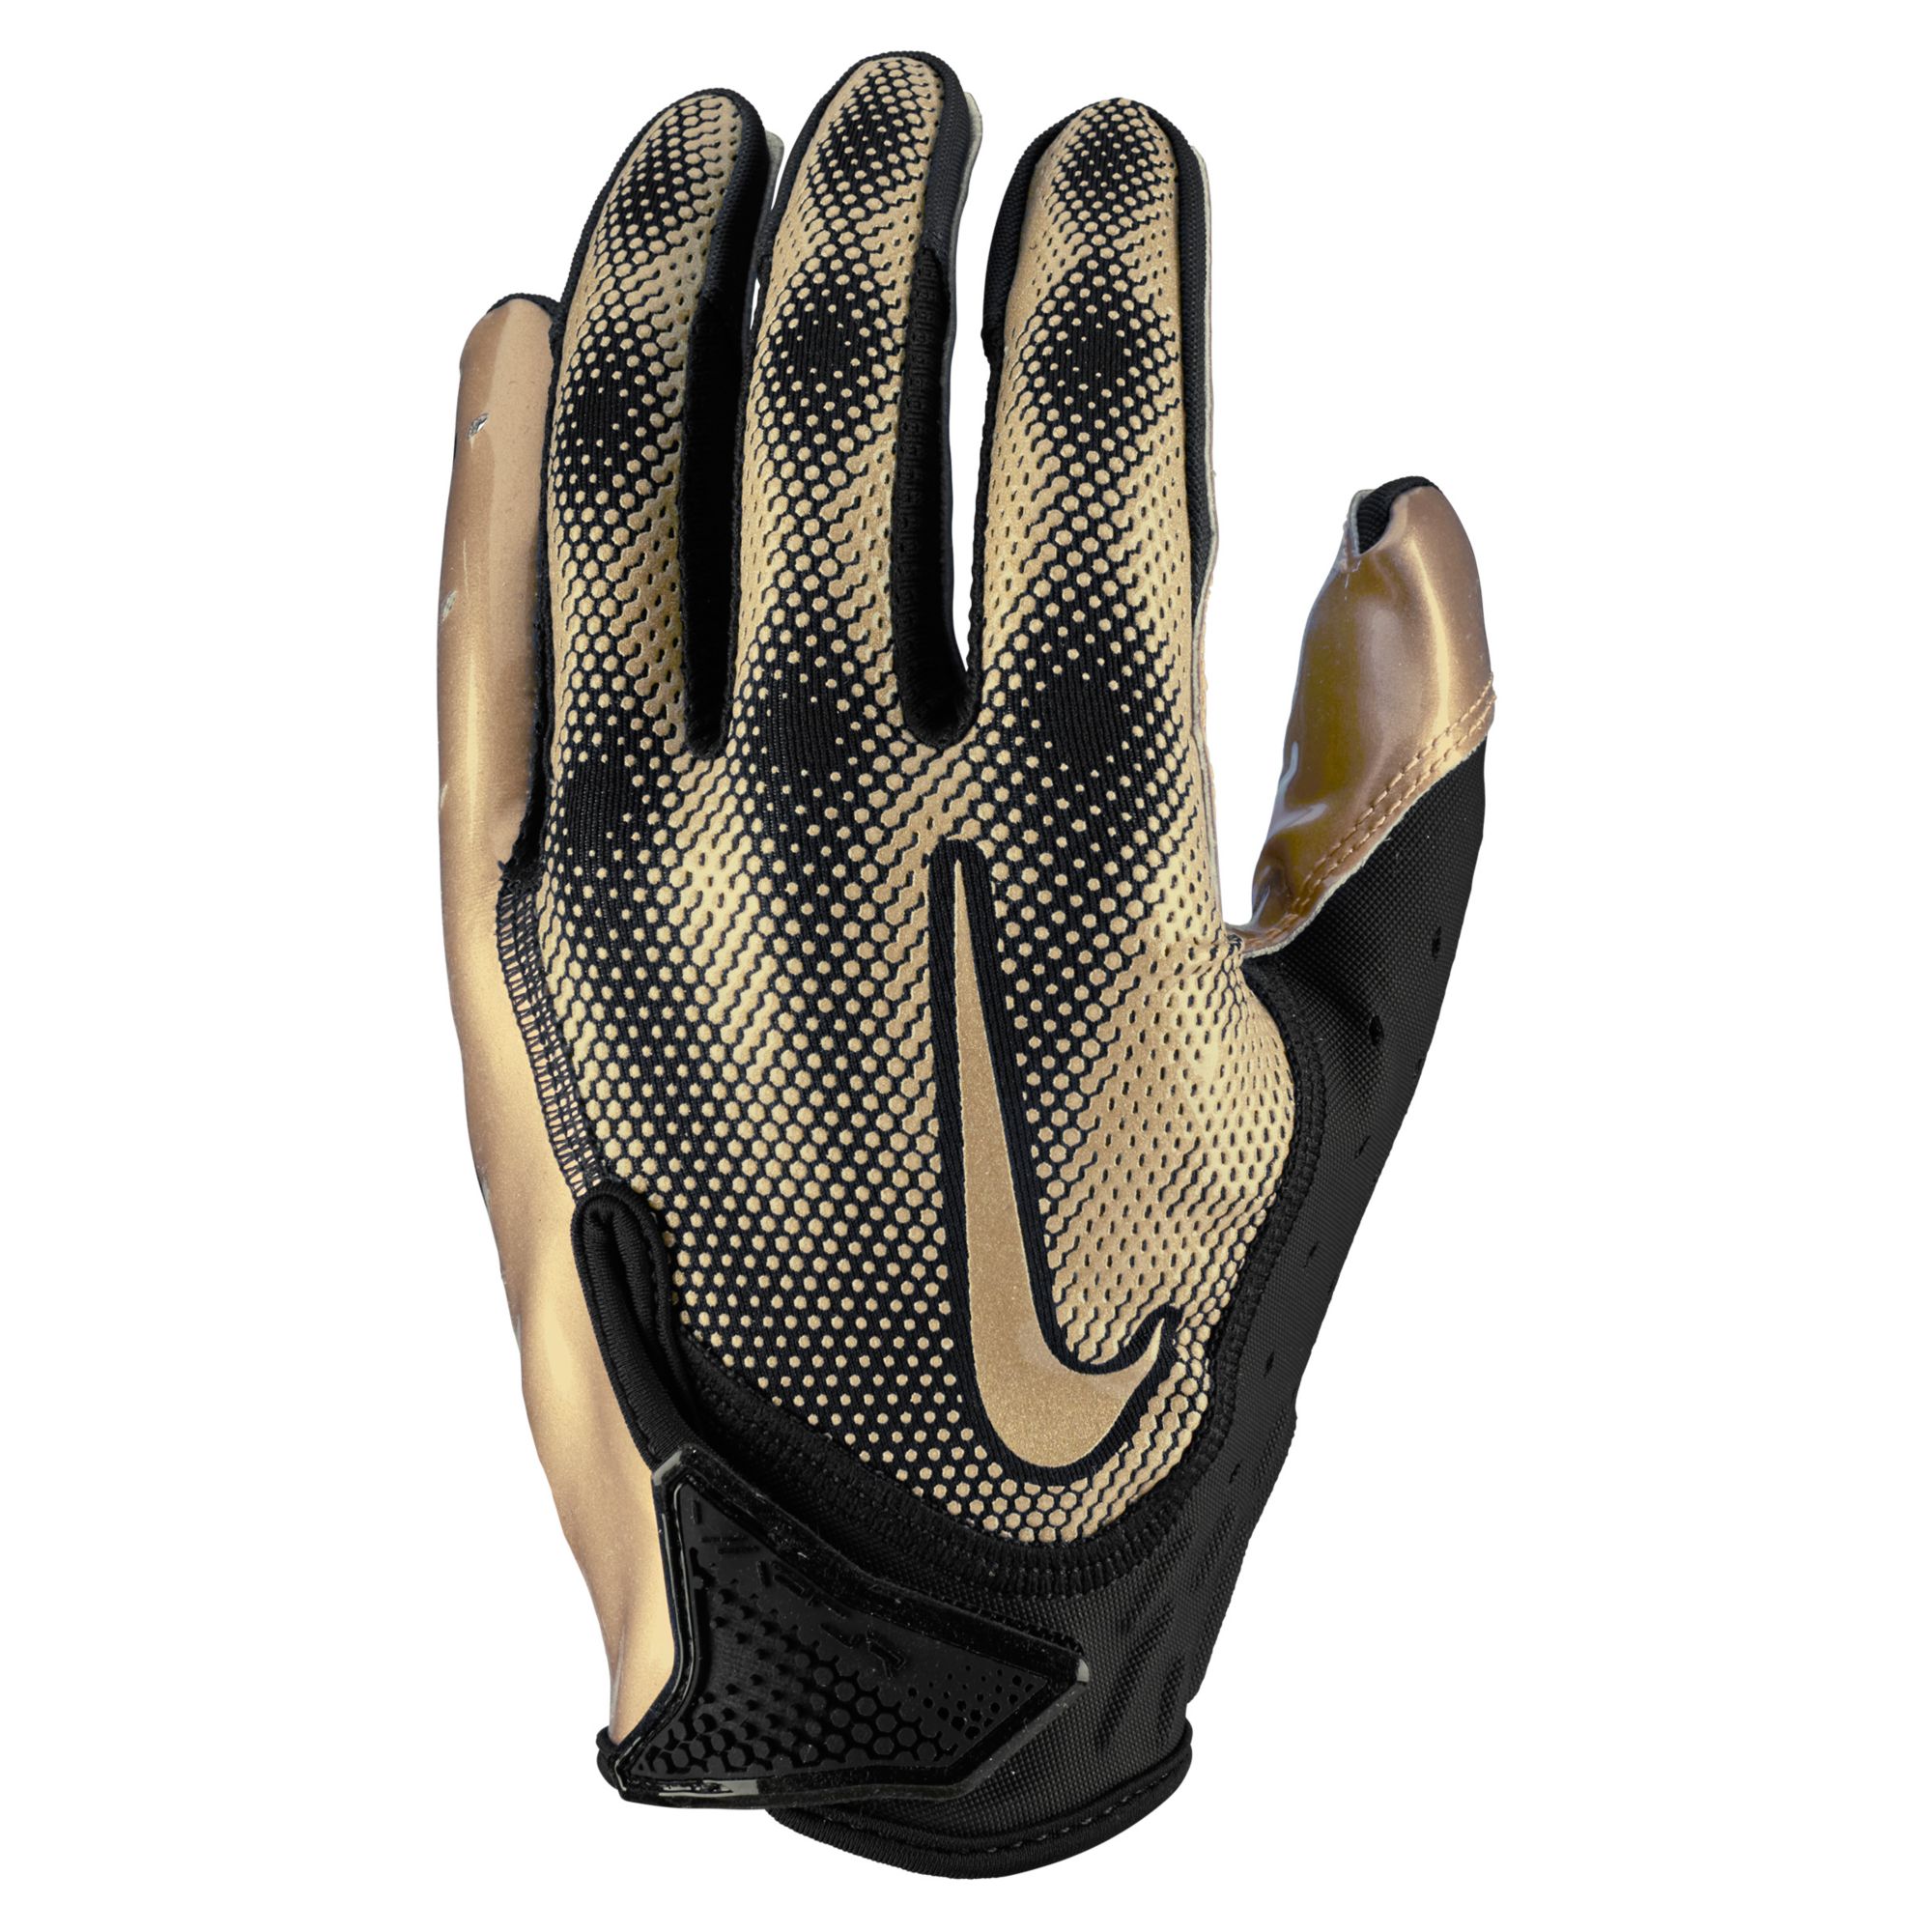 Nike Vapor Jet Metallic 7.0 Football Gloves | The Market Place